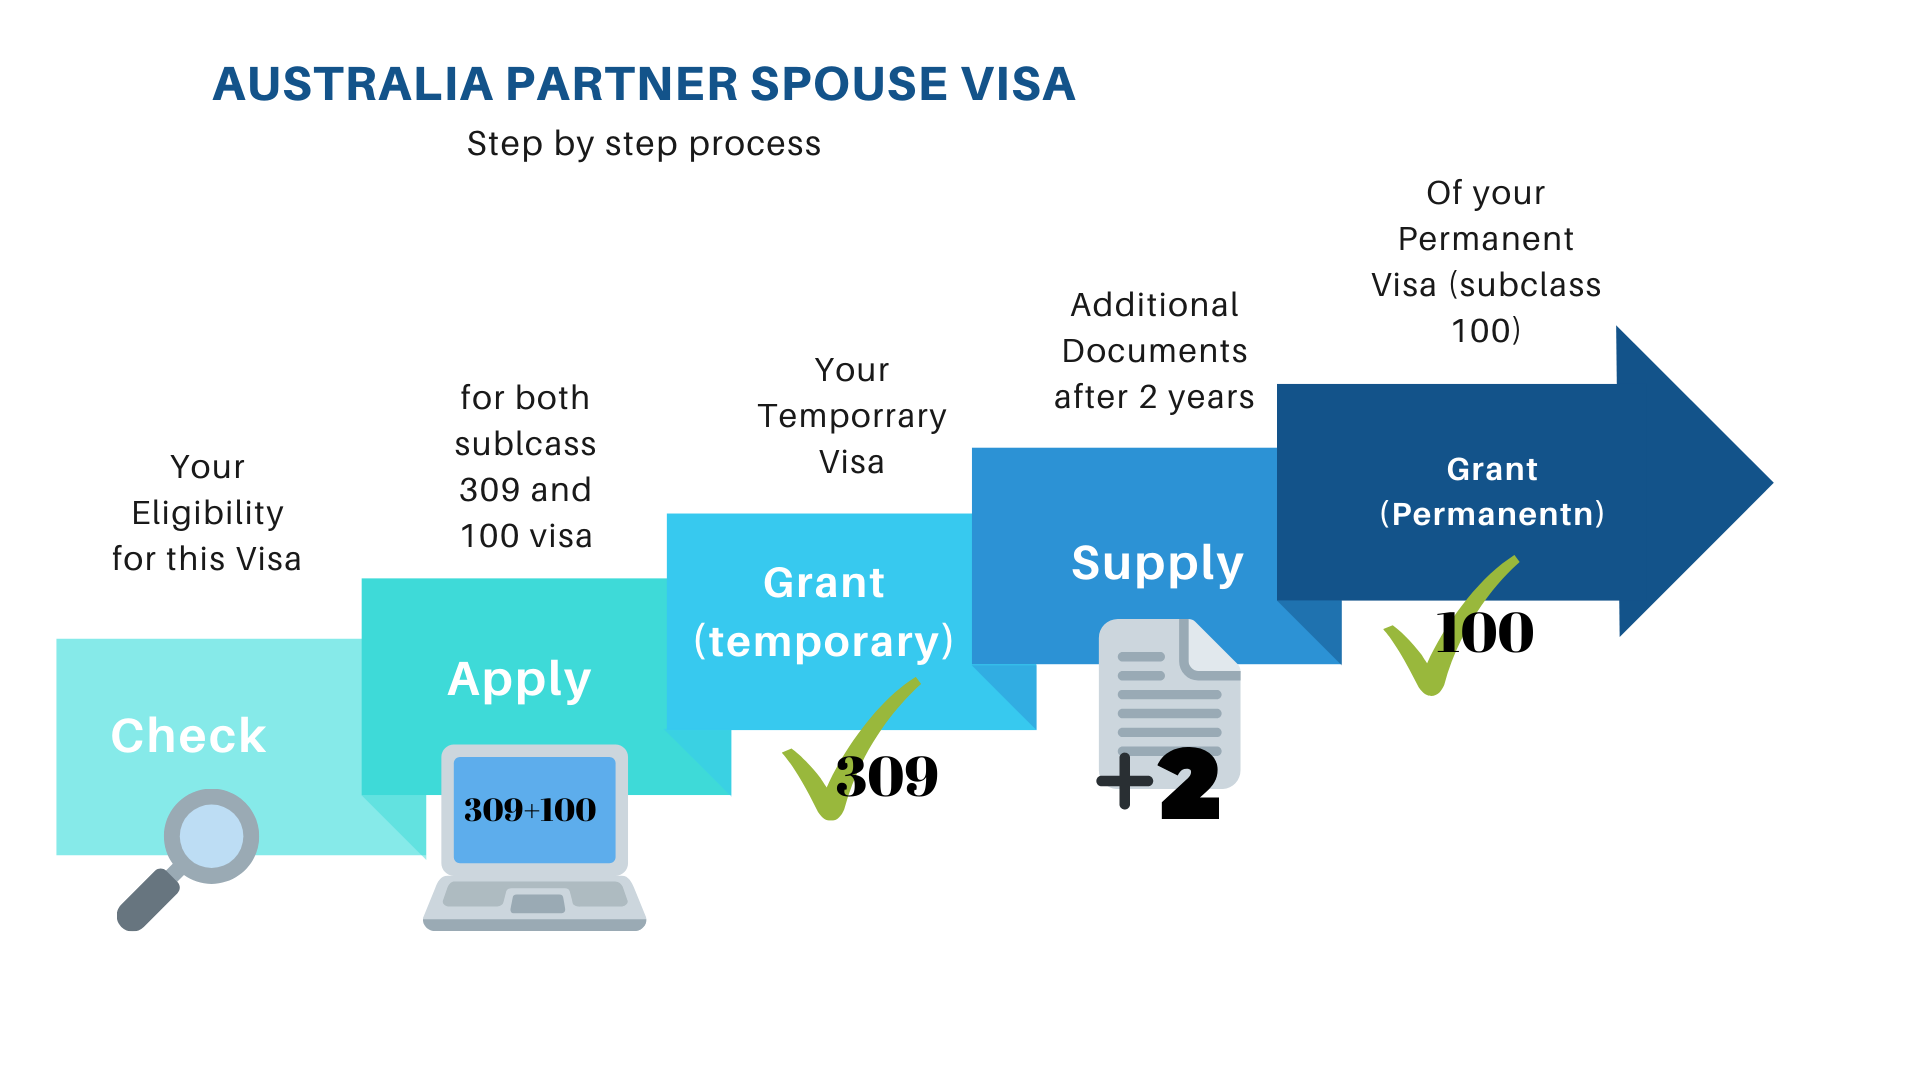 Australia Partner spouse visa